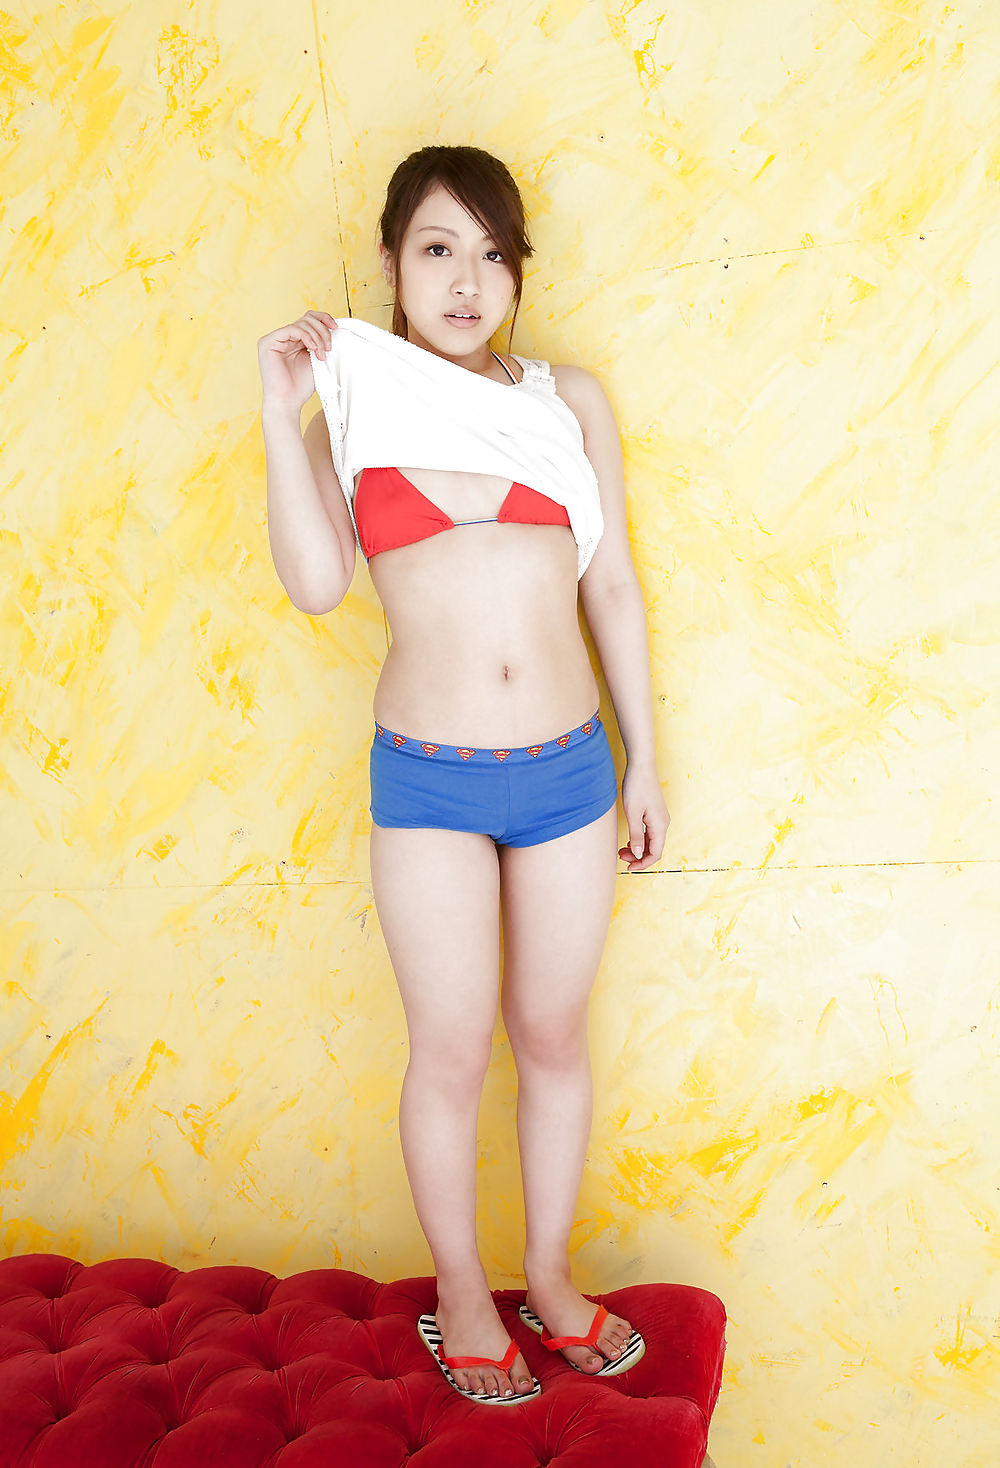 Japonés bikini babes-kokoro hirahara (1)
 #6964636